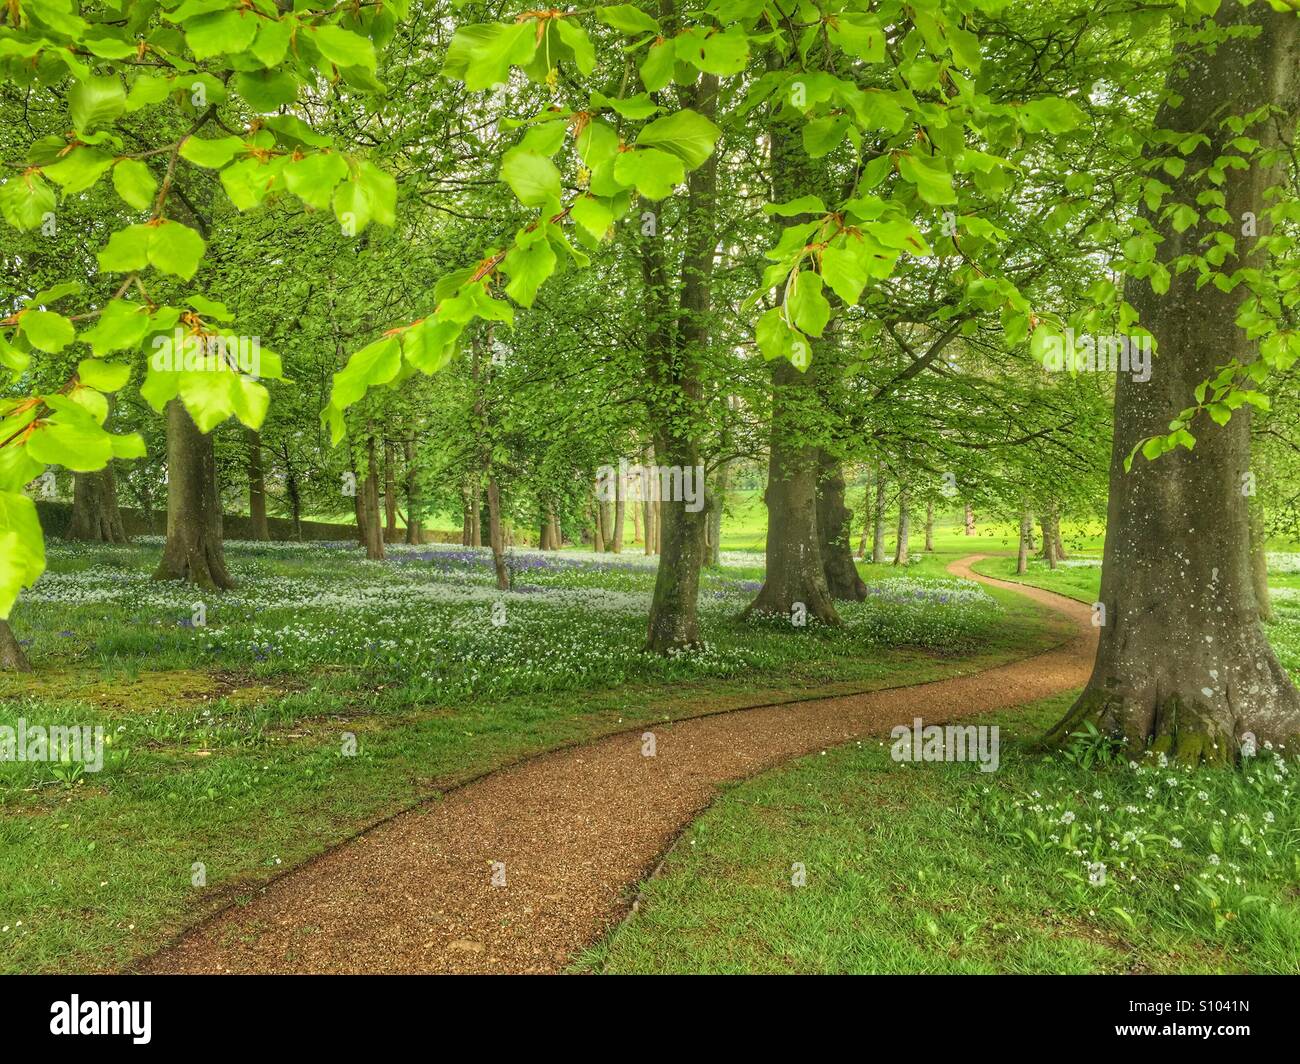 Winding path through green trees Stock Photo